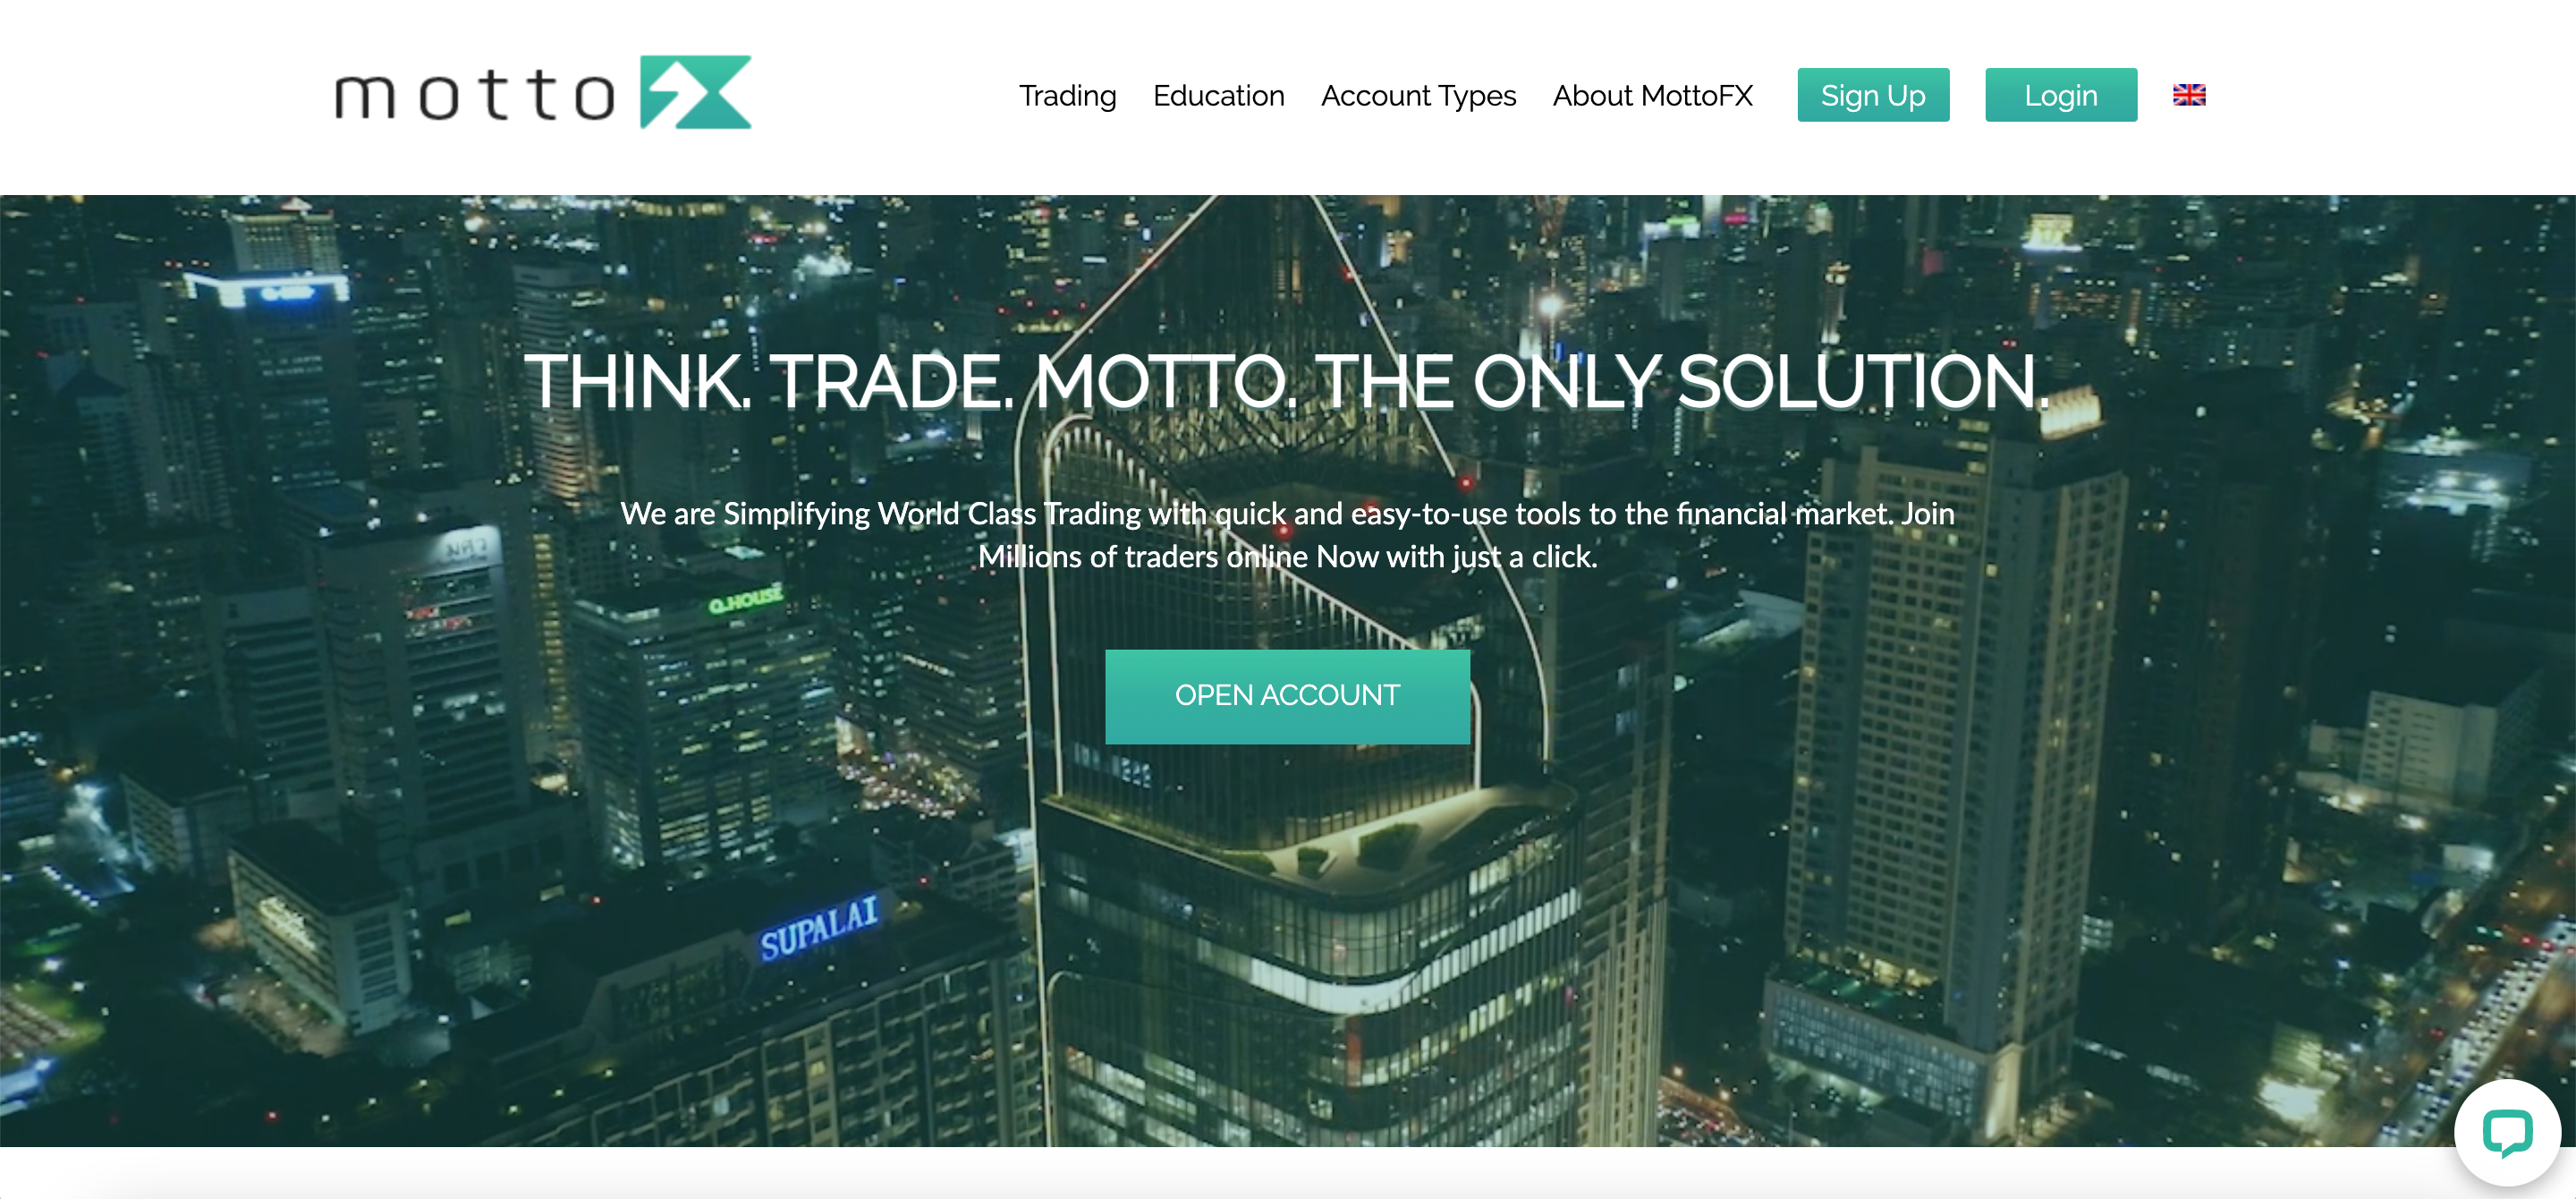 Motto FX website